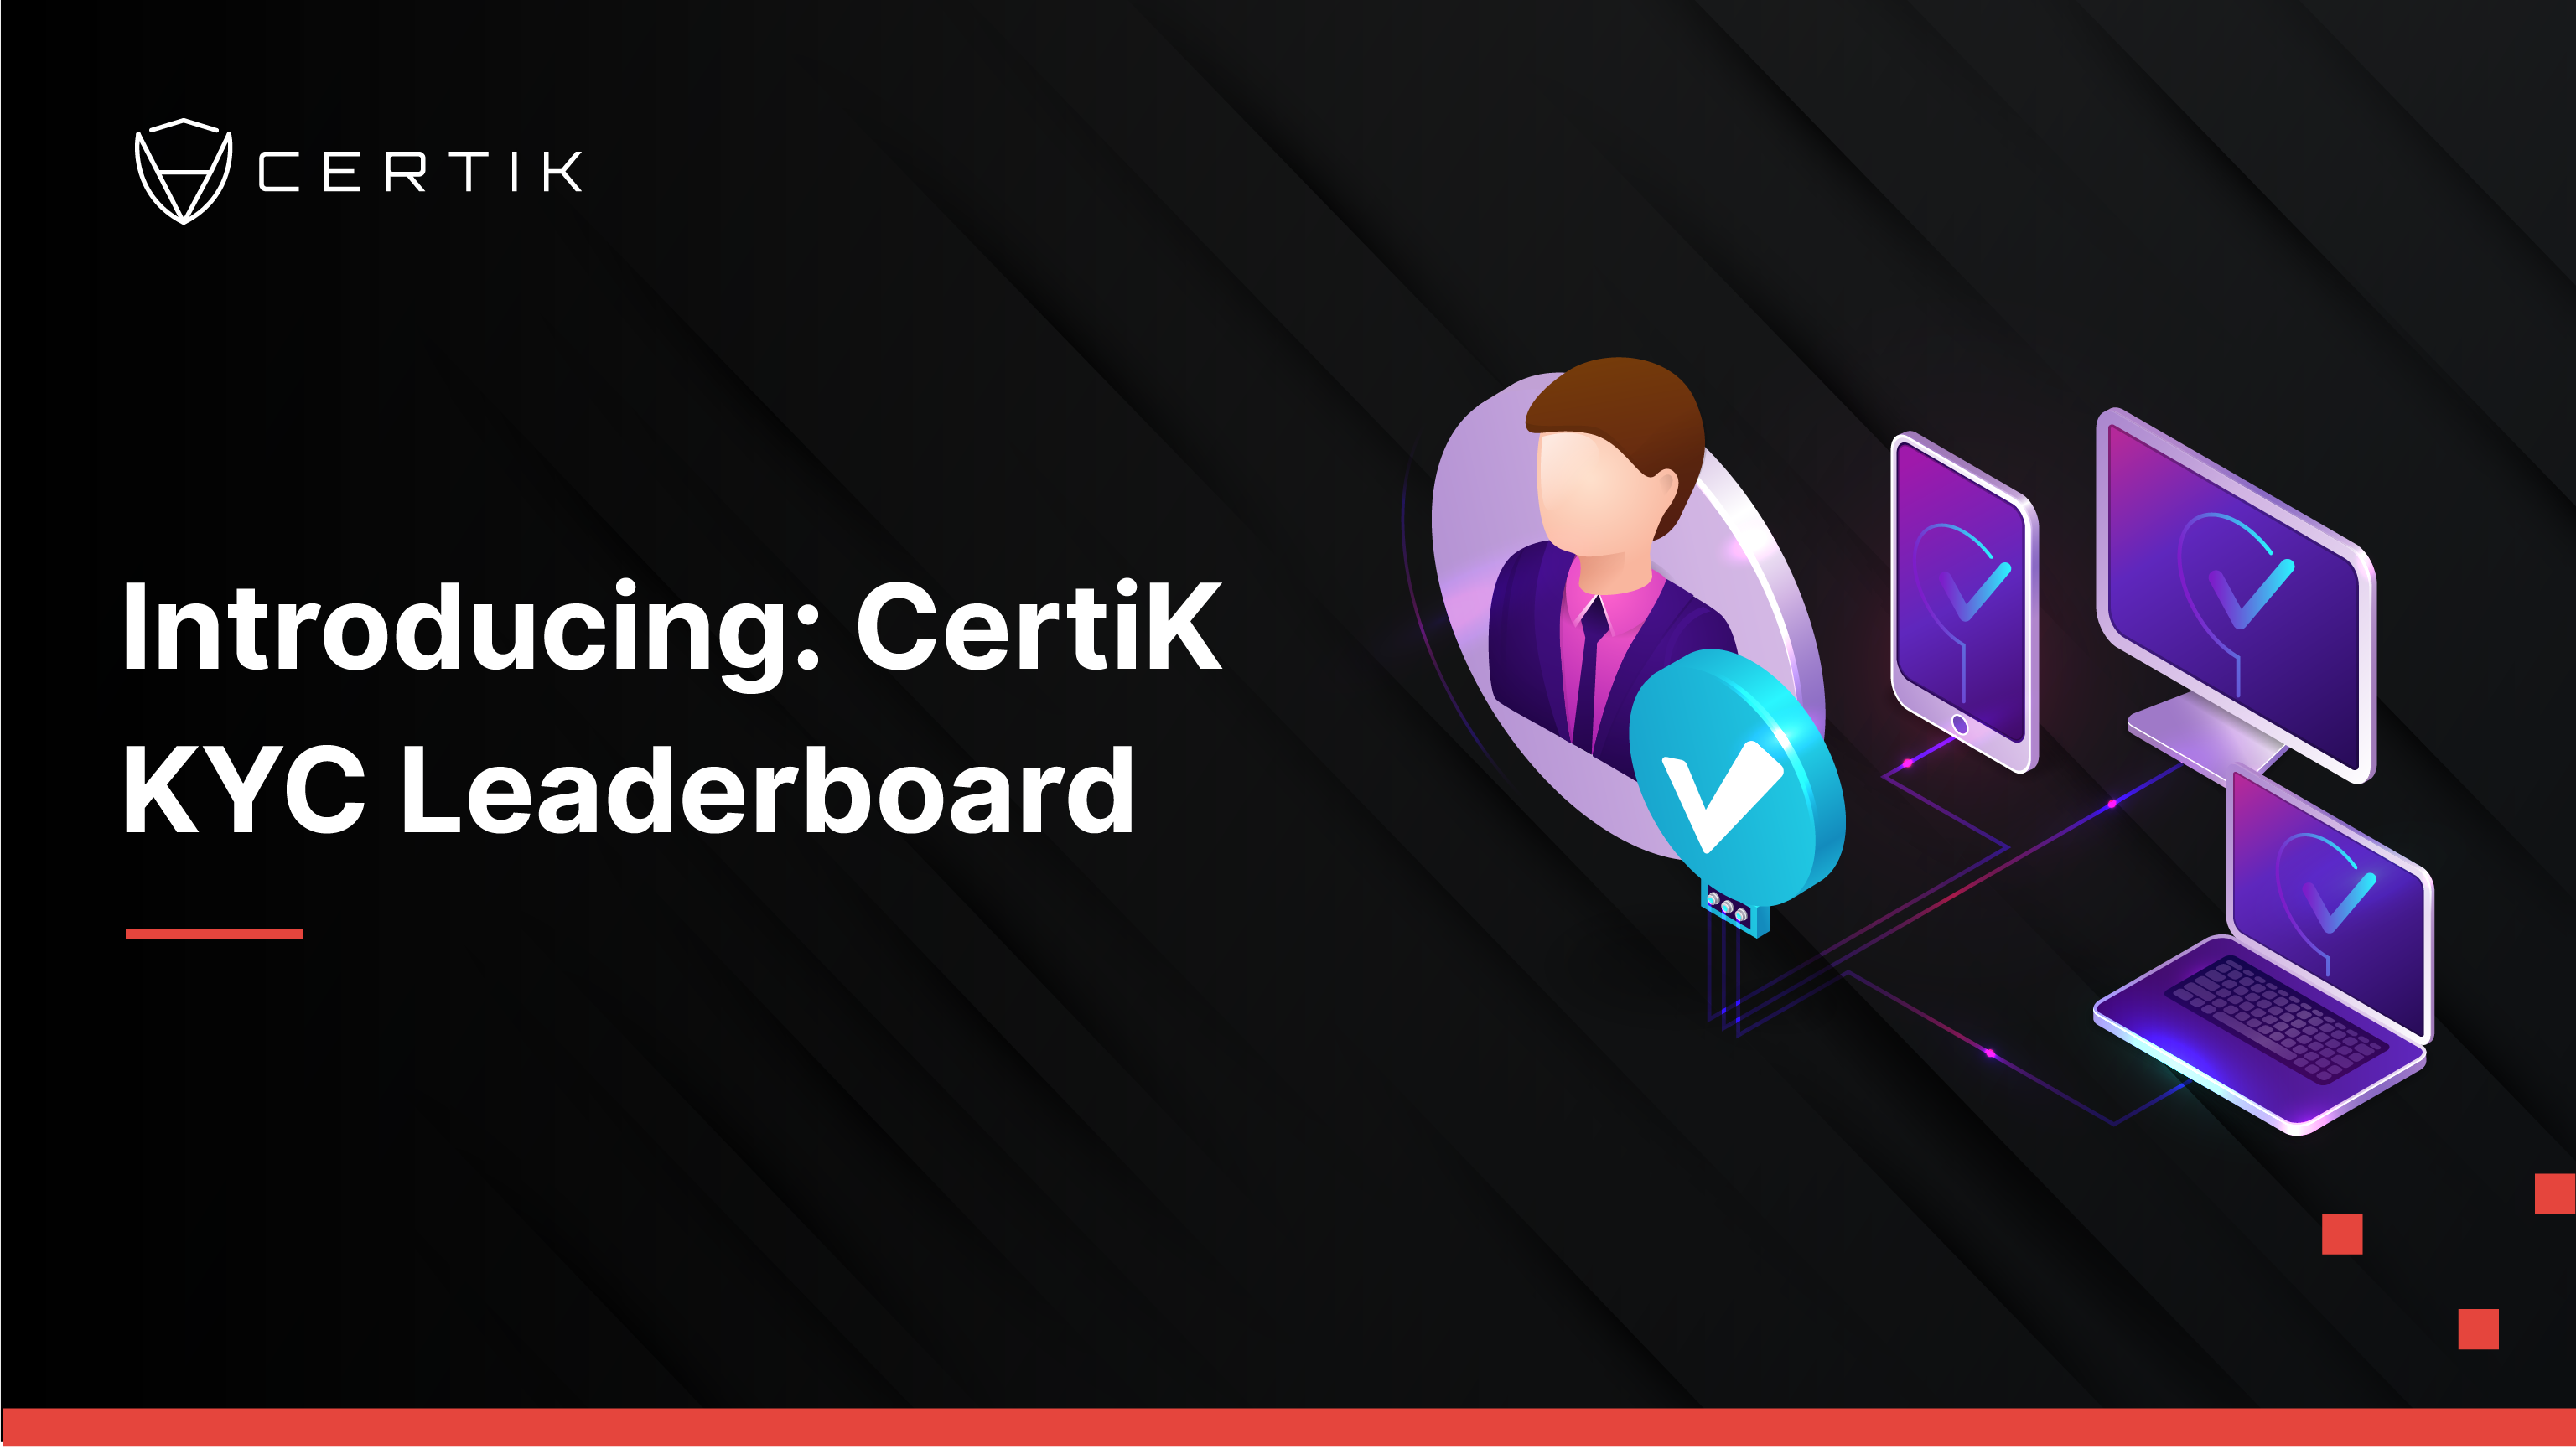 Introducing the CertiK KYC Leaderboard